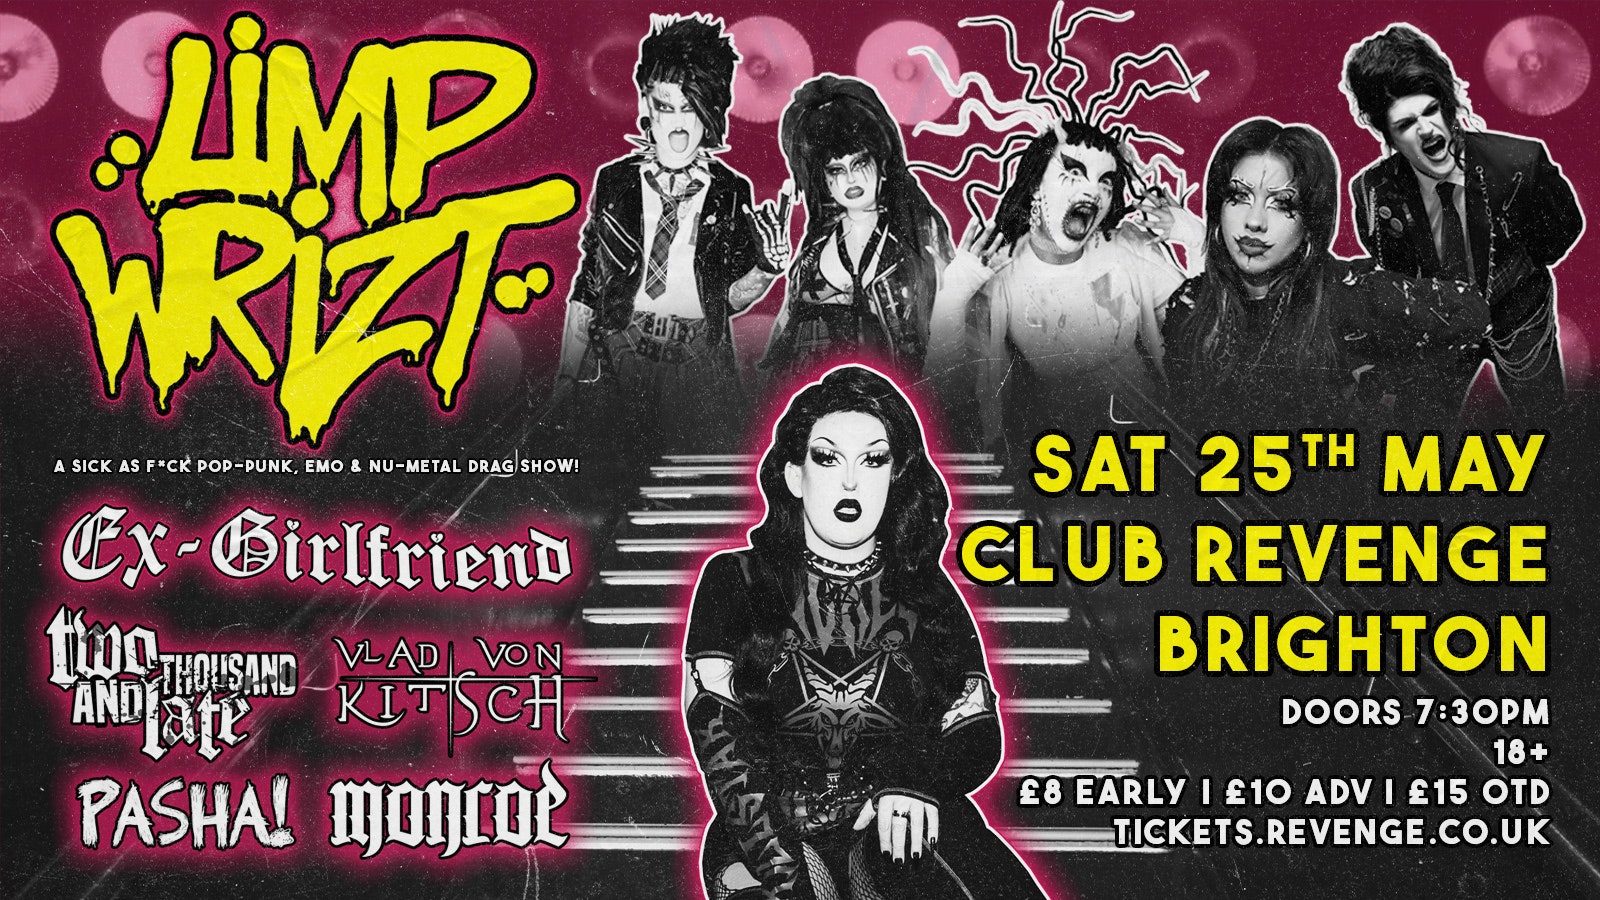 Limp Wrizt – A Sick Pop Punk, Emo & Nu-Metal Drag Show!